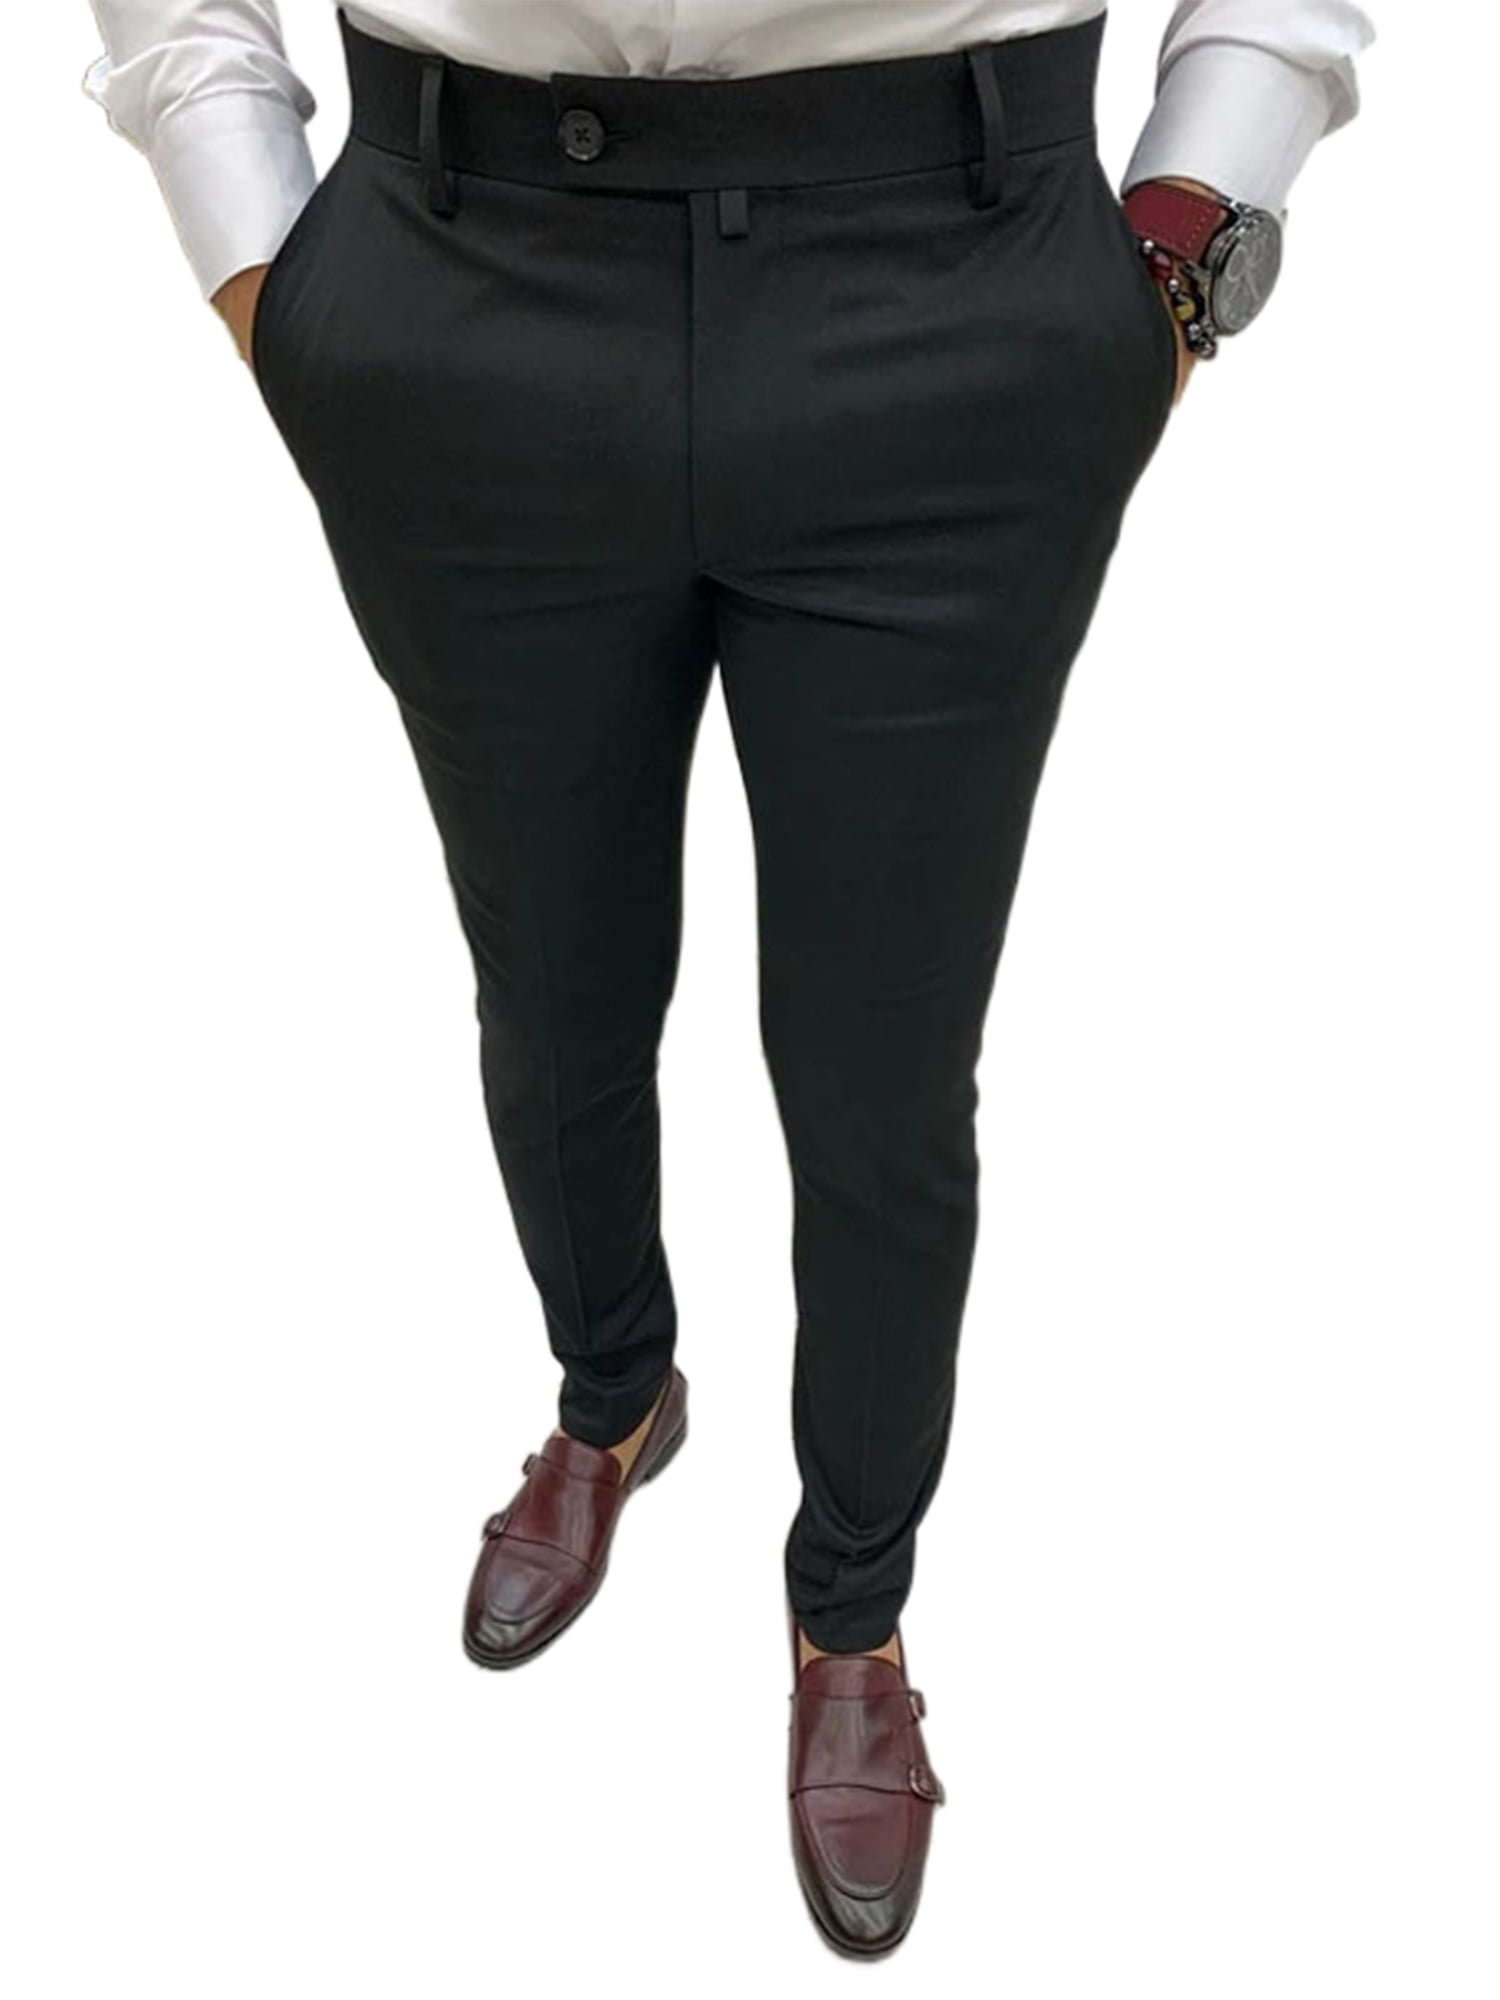 HNTHY Autumn Business Dress Pants Men High Waist Button Office Social Suit  Pants Casual Slim Trousers (Color : Black, Size : 32code) : Amazon.ca:  Clothing, Shoes & Accessories